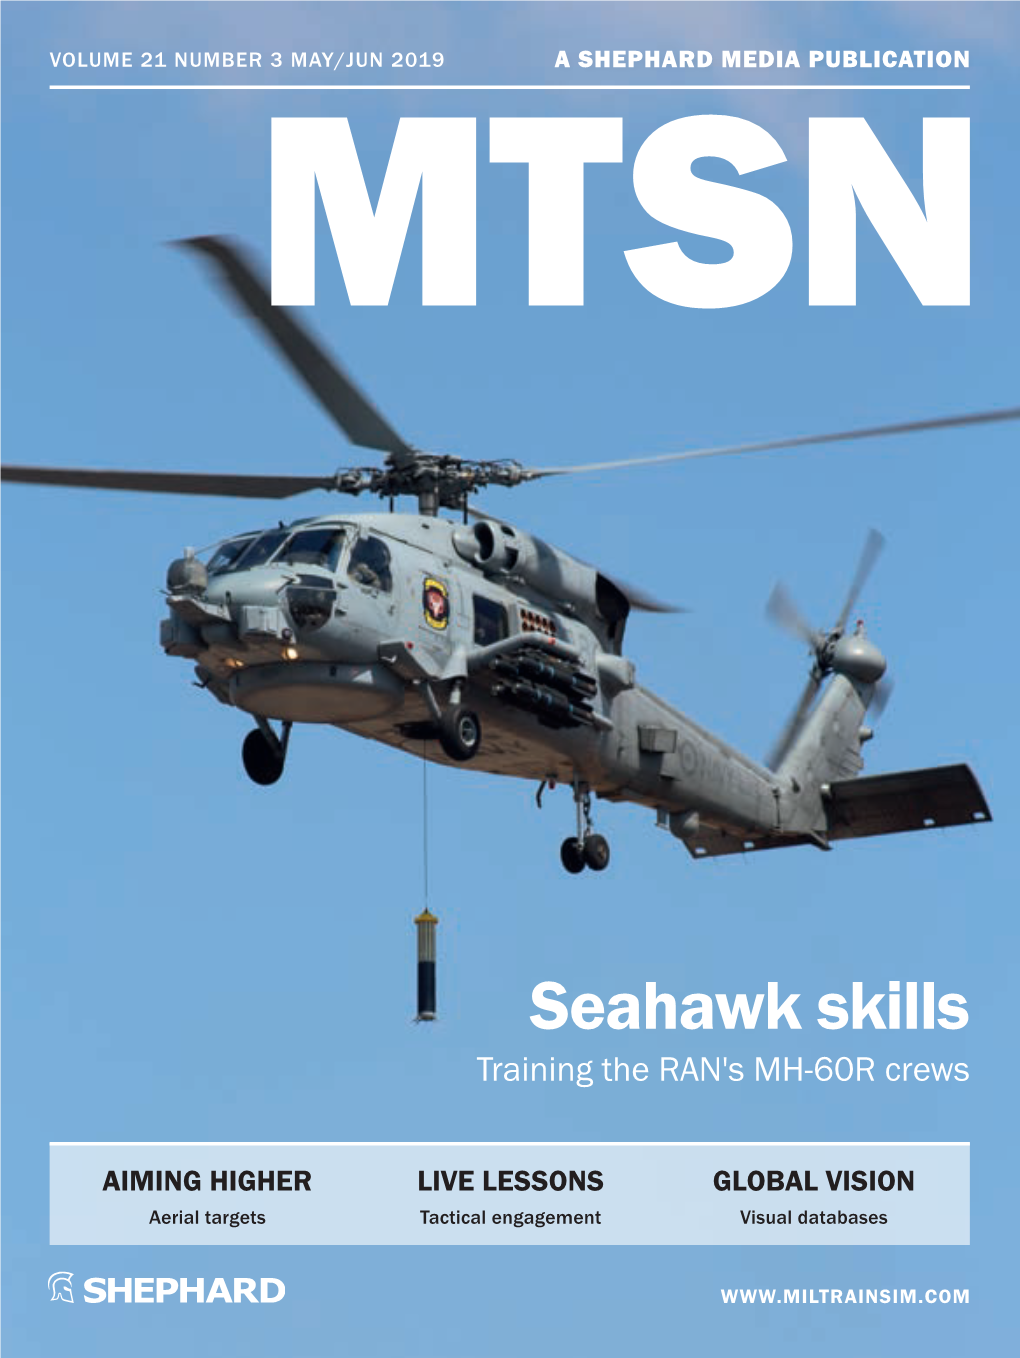 Seahawk Skills Training the RAN's MH-60R Crews